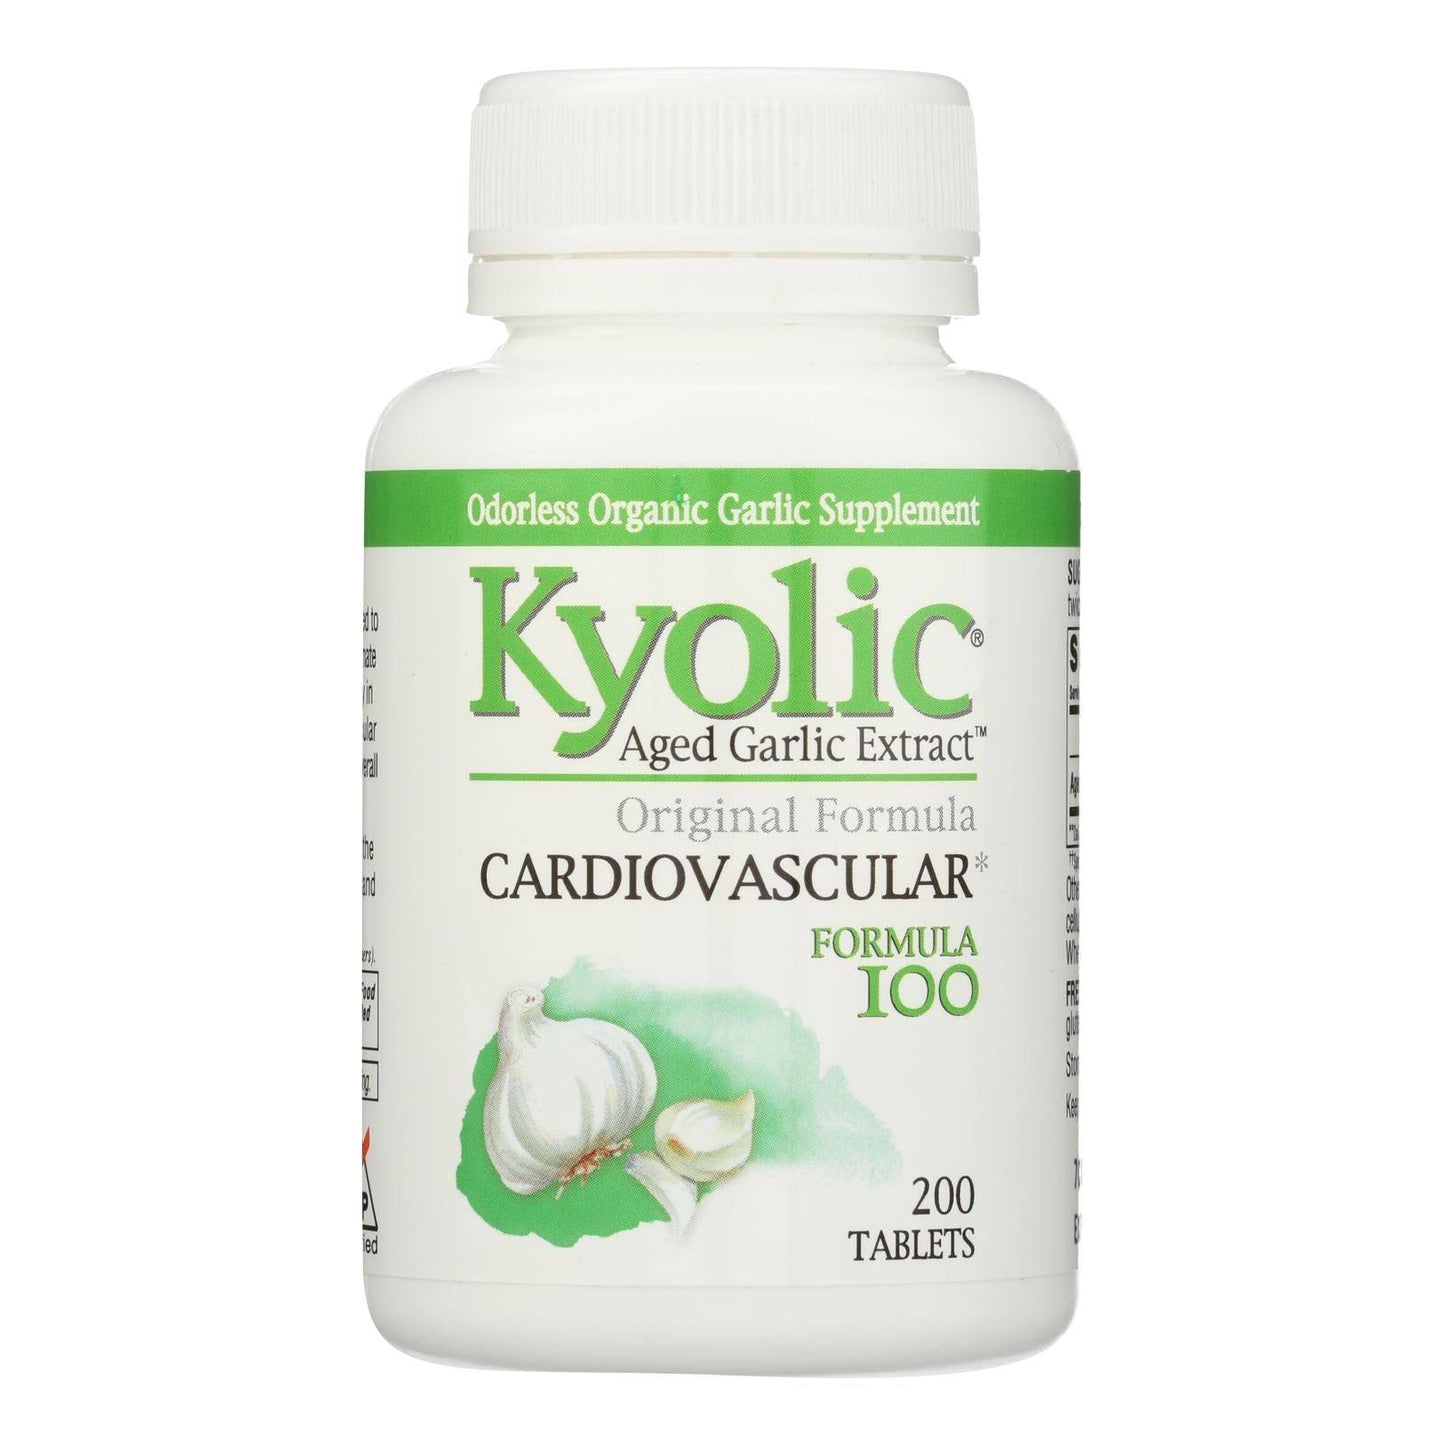 Buy Kyolic - Aged Garlic Extract Hi-po Cardiovascular Original Formula 100 - 200 Tablets  at OnlyNaturals.us